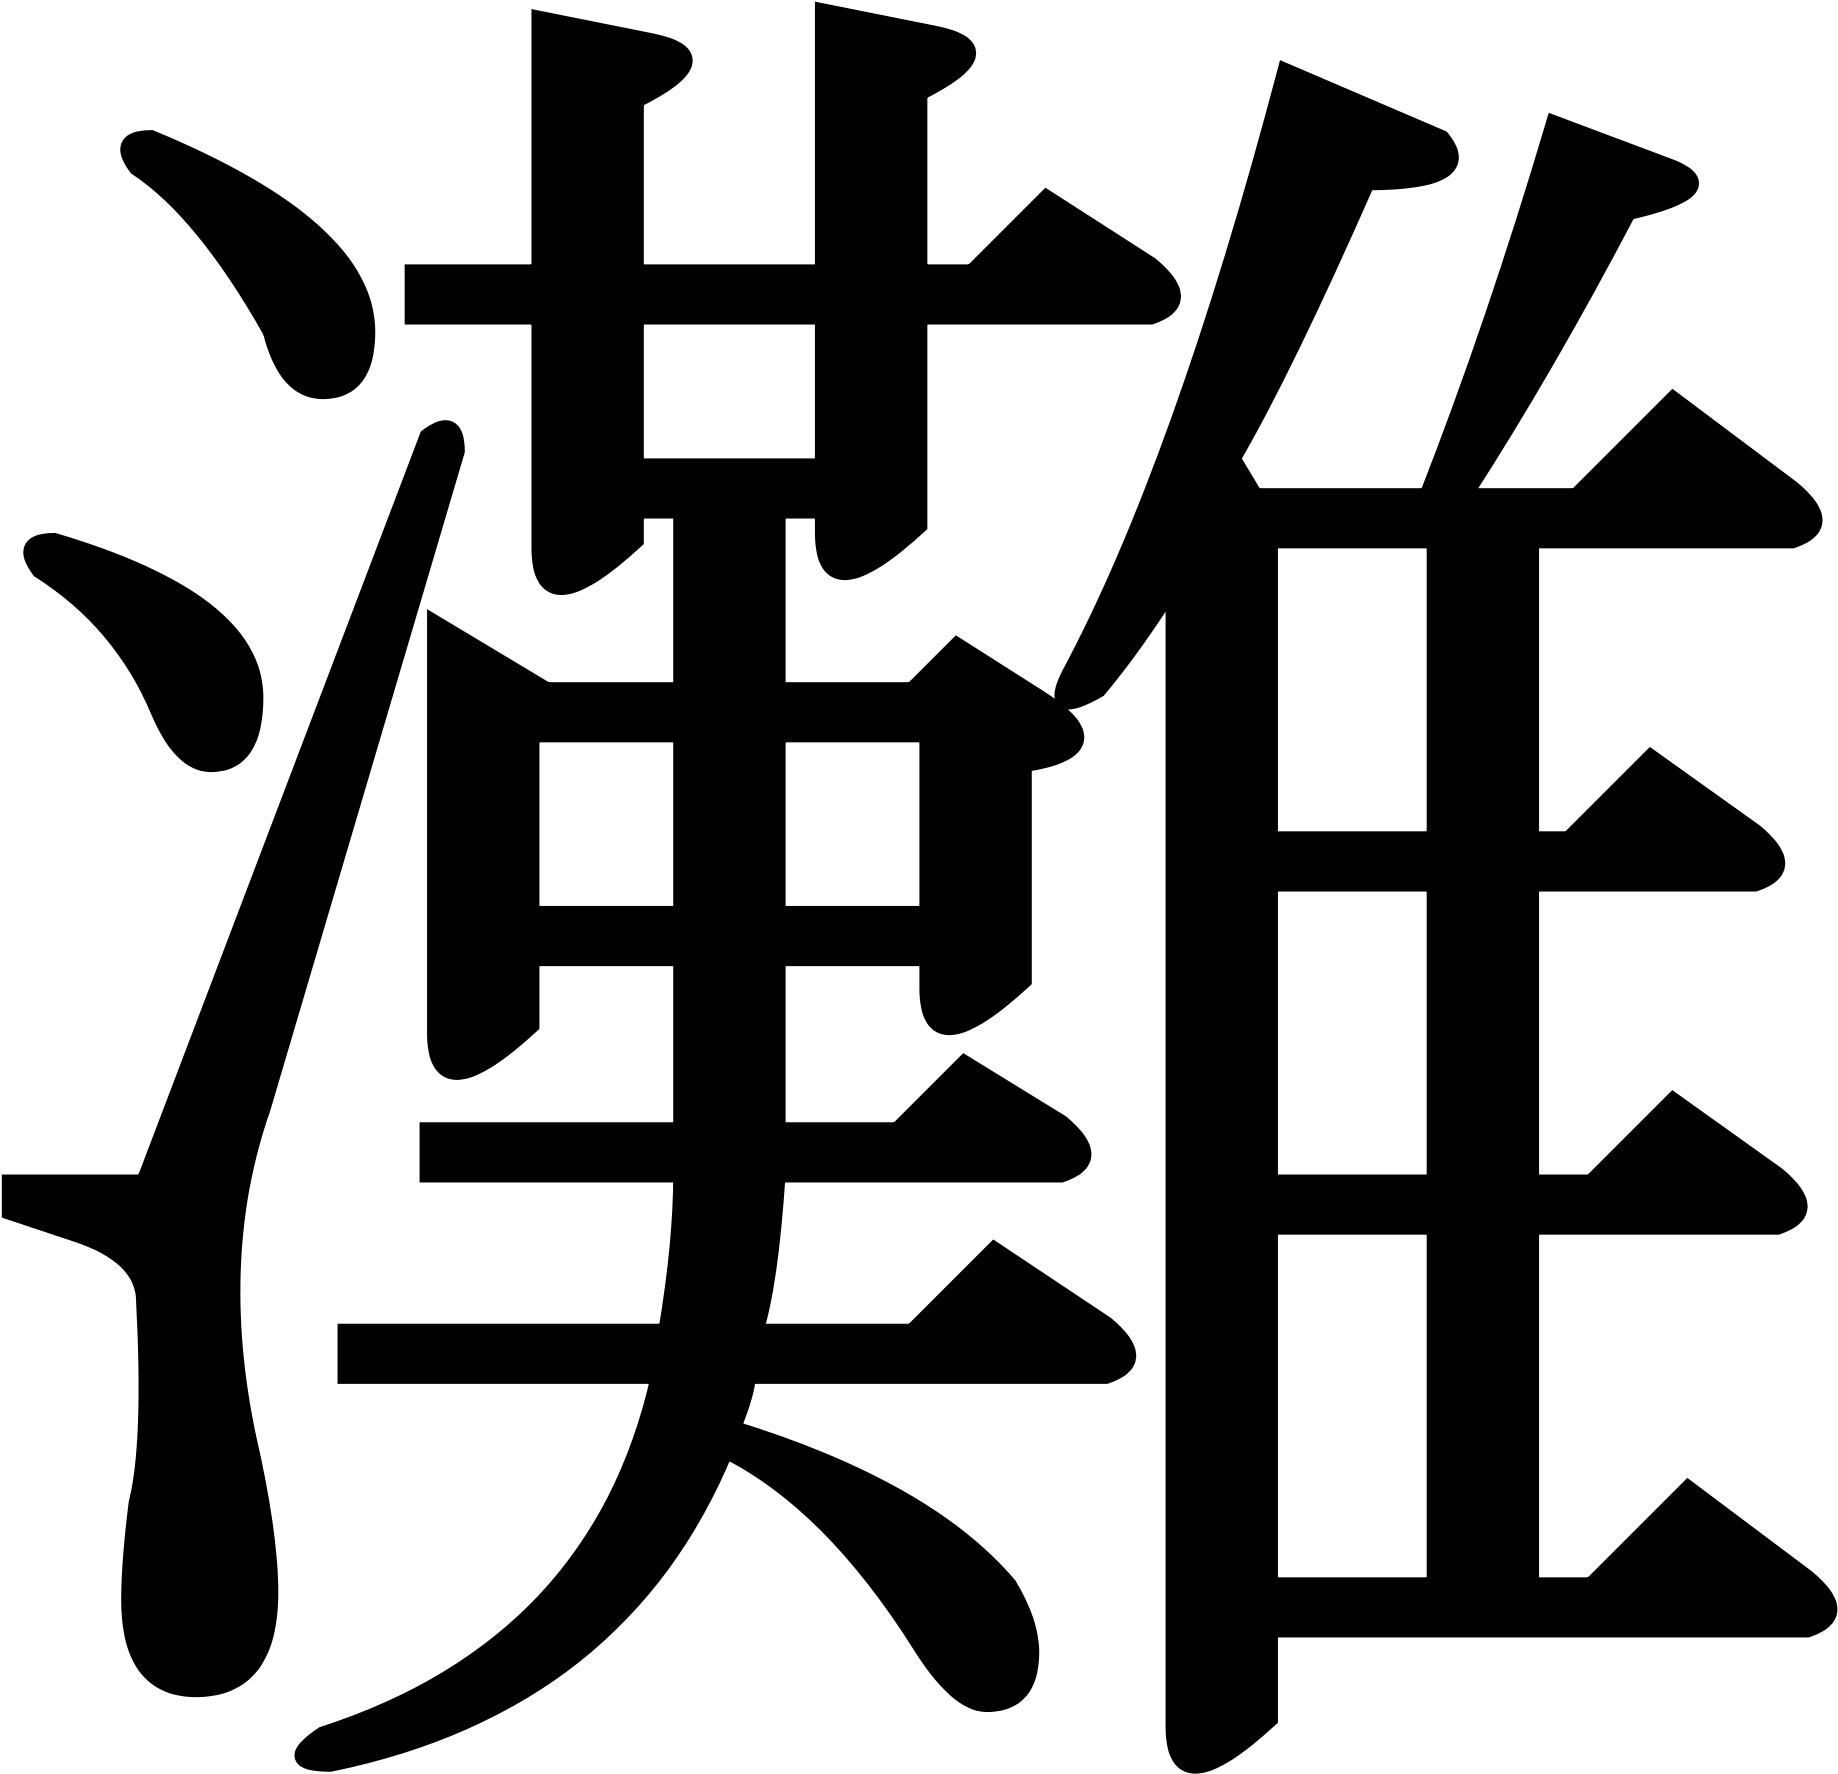 Система знаков у японцев 11 букв. Канзи Япония. Японский иероглиф Kanji. Иероглиф иероглиф Канджи. Китайский иероглиф кандзи.